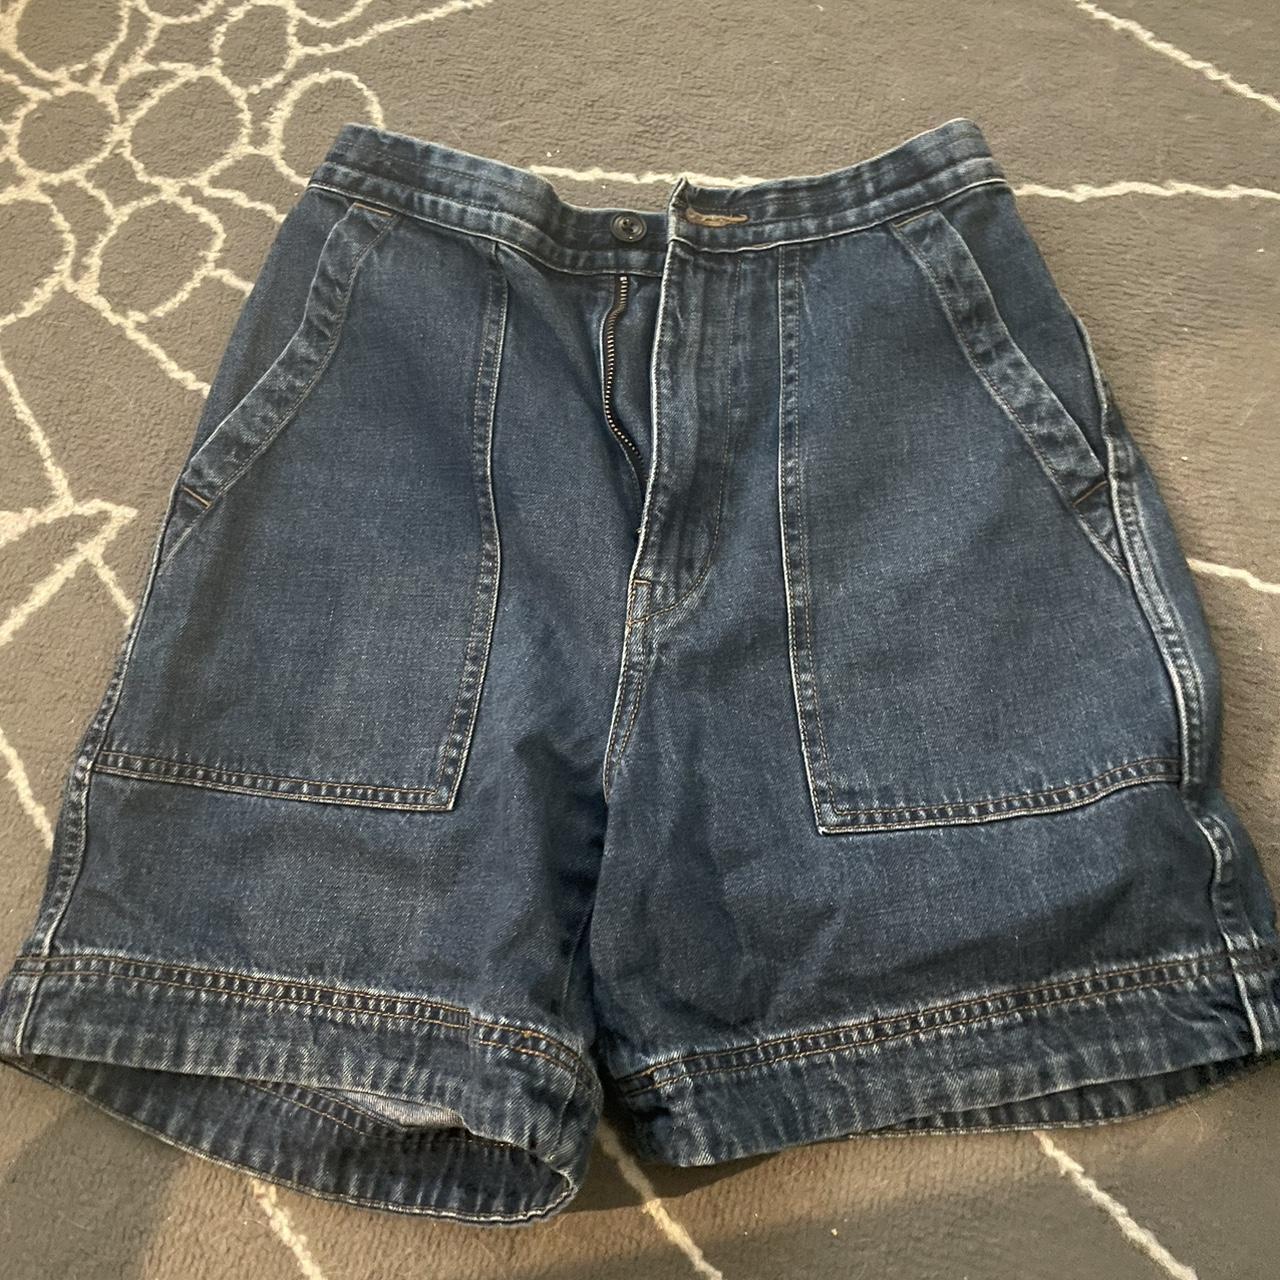 Uniqlo baggy blue Jean shorts! Cute jorts size small - Depop